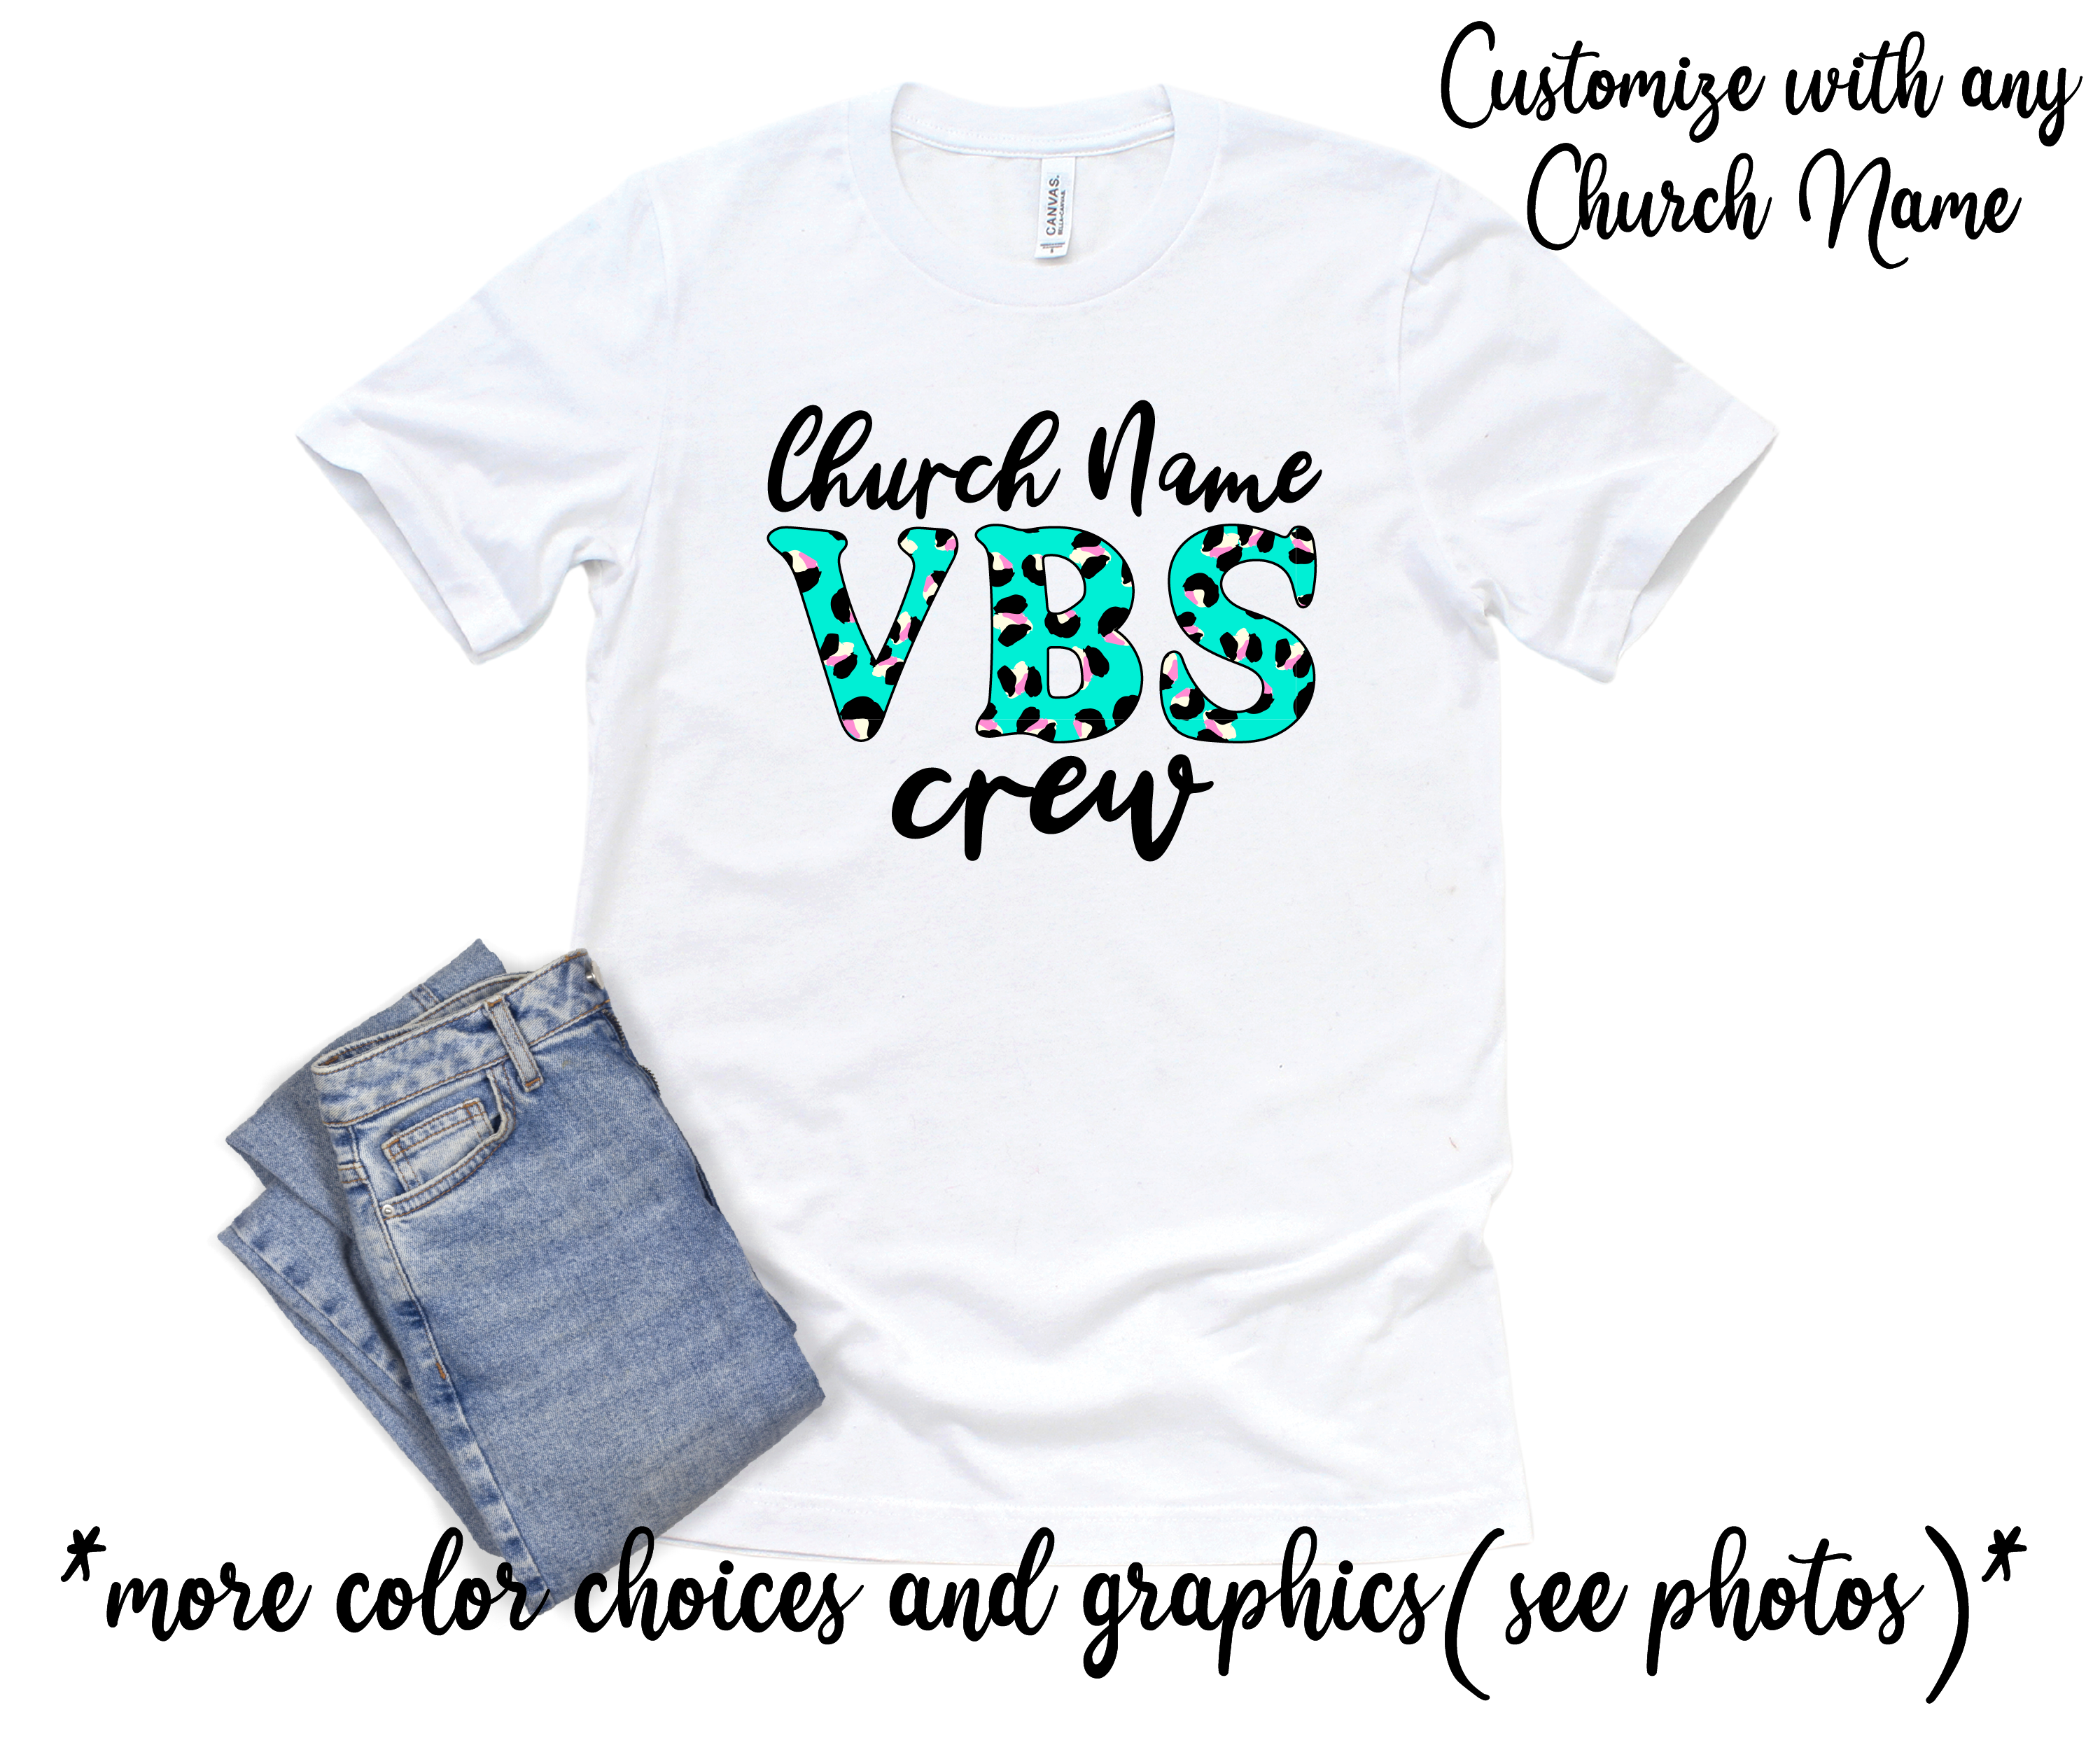 VBS Custom Church Name Vacation Bible School Team Leader Shirts